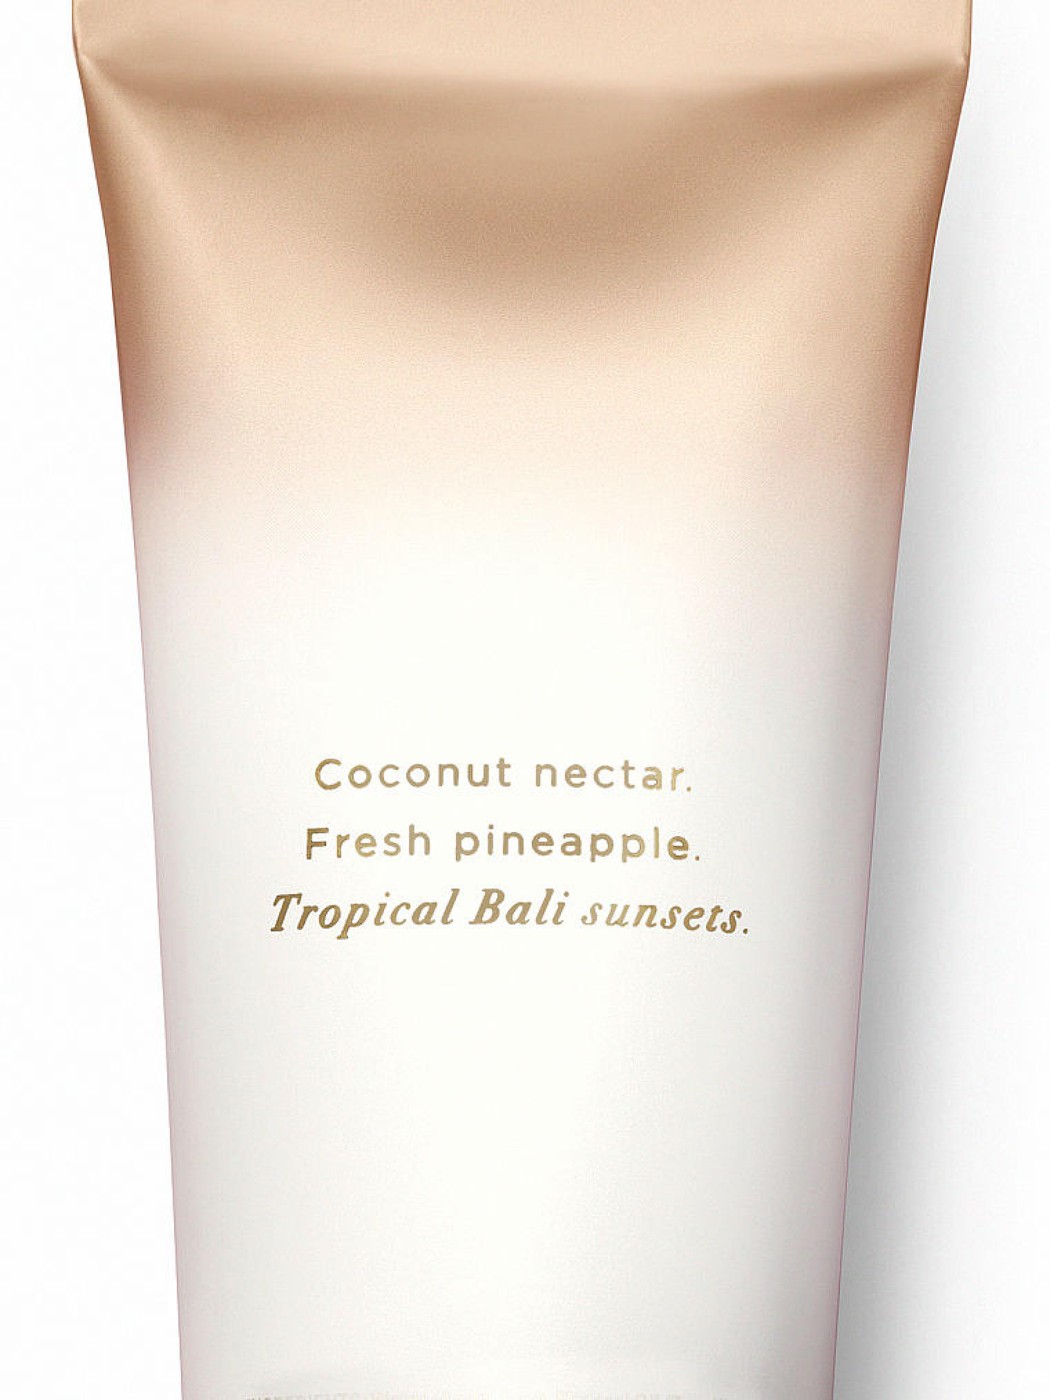 Подарочный набор Victoria's Secret Bali Coconut Palm (Fragrance Mist/Fragrance Nourishing Hand & Body Lotion), 250 мл / 236 мл, 250 мл / 236 мл